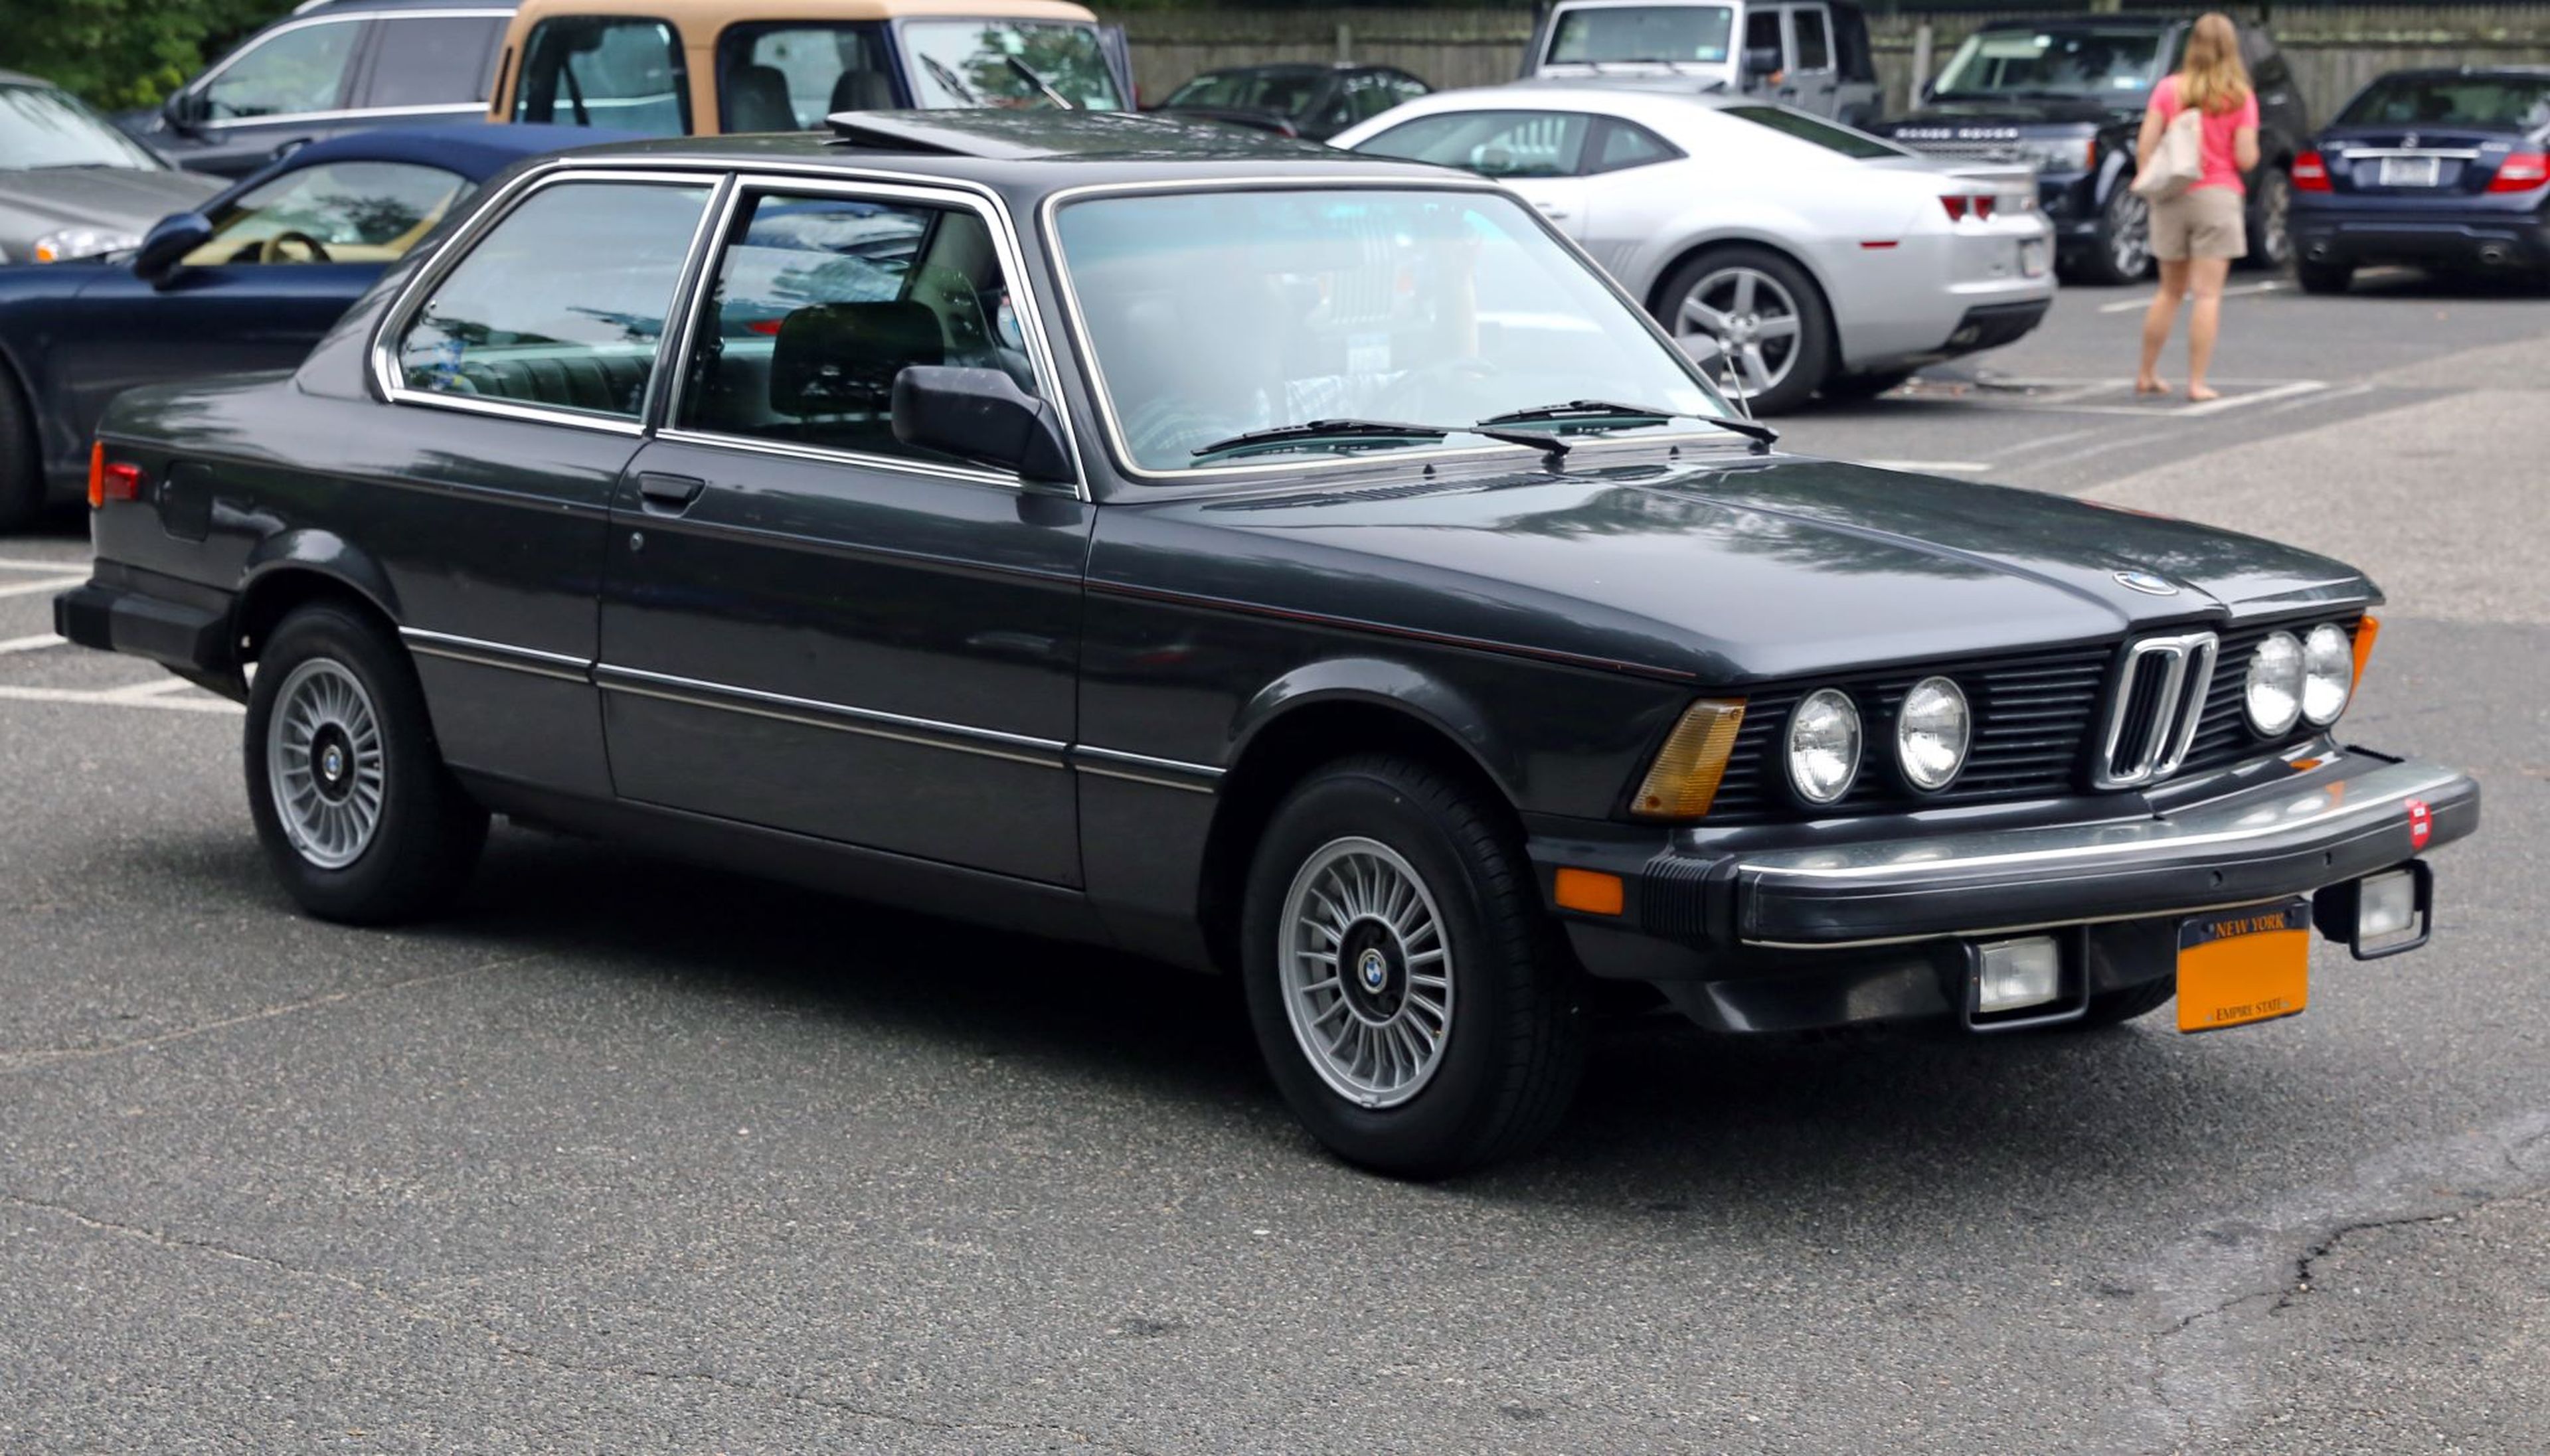 BMW 320i 1981, modelo similar al primer coche de Elon Musk.